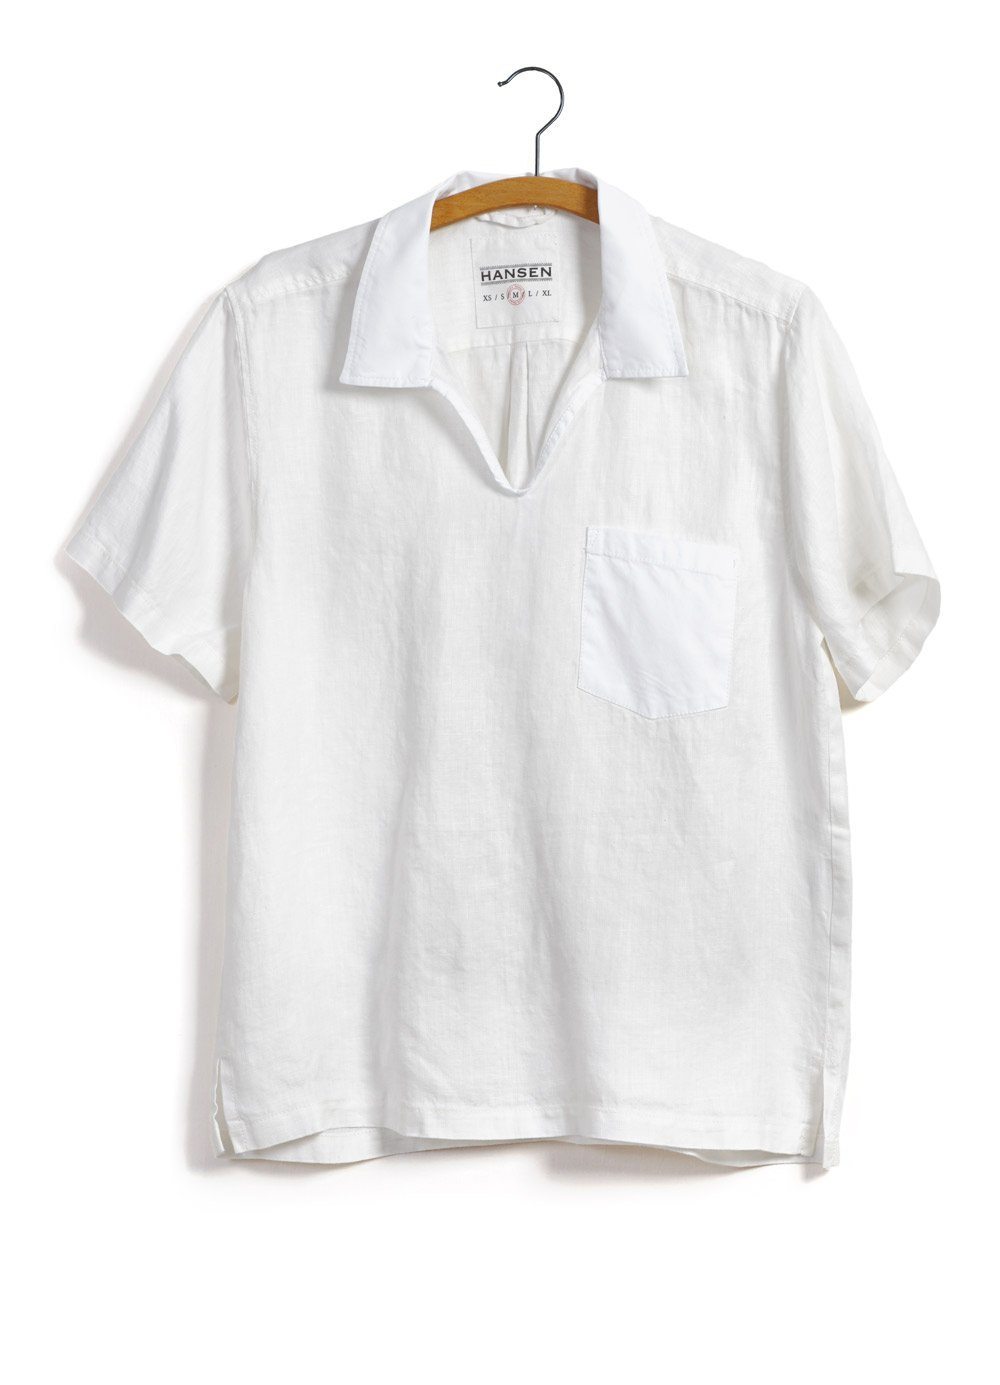 PHILLIP | Short Sleeve Pull-On Shirt | White -HANSEN Garments- HANSEN Garments